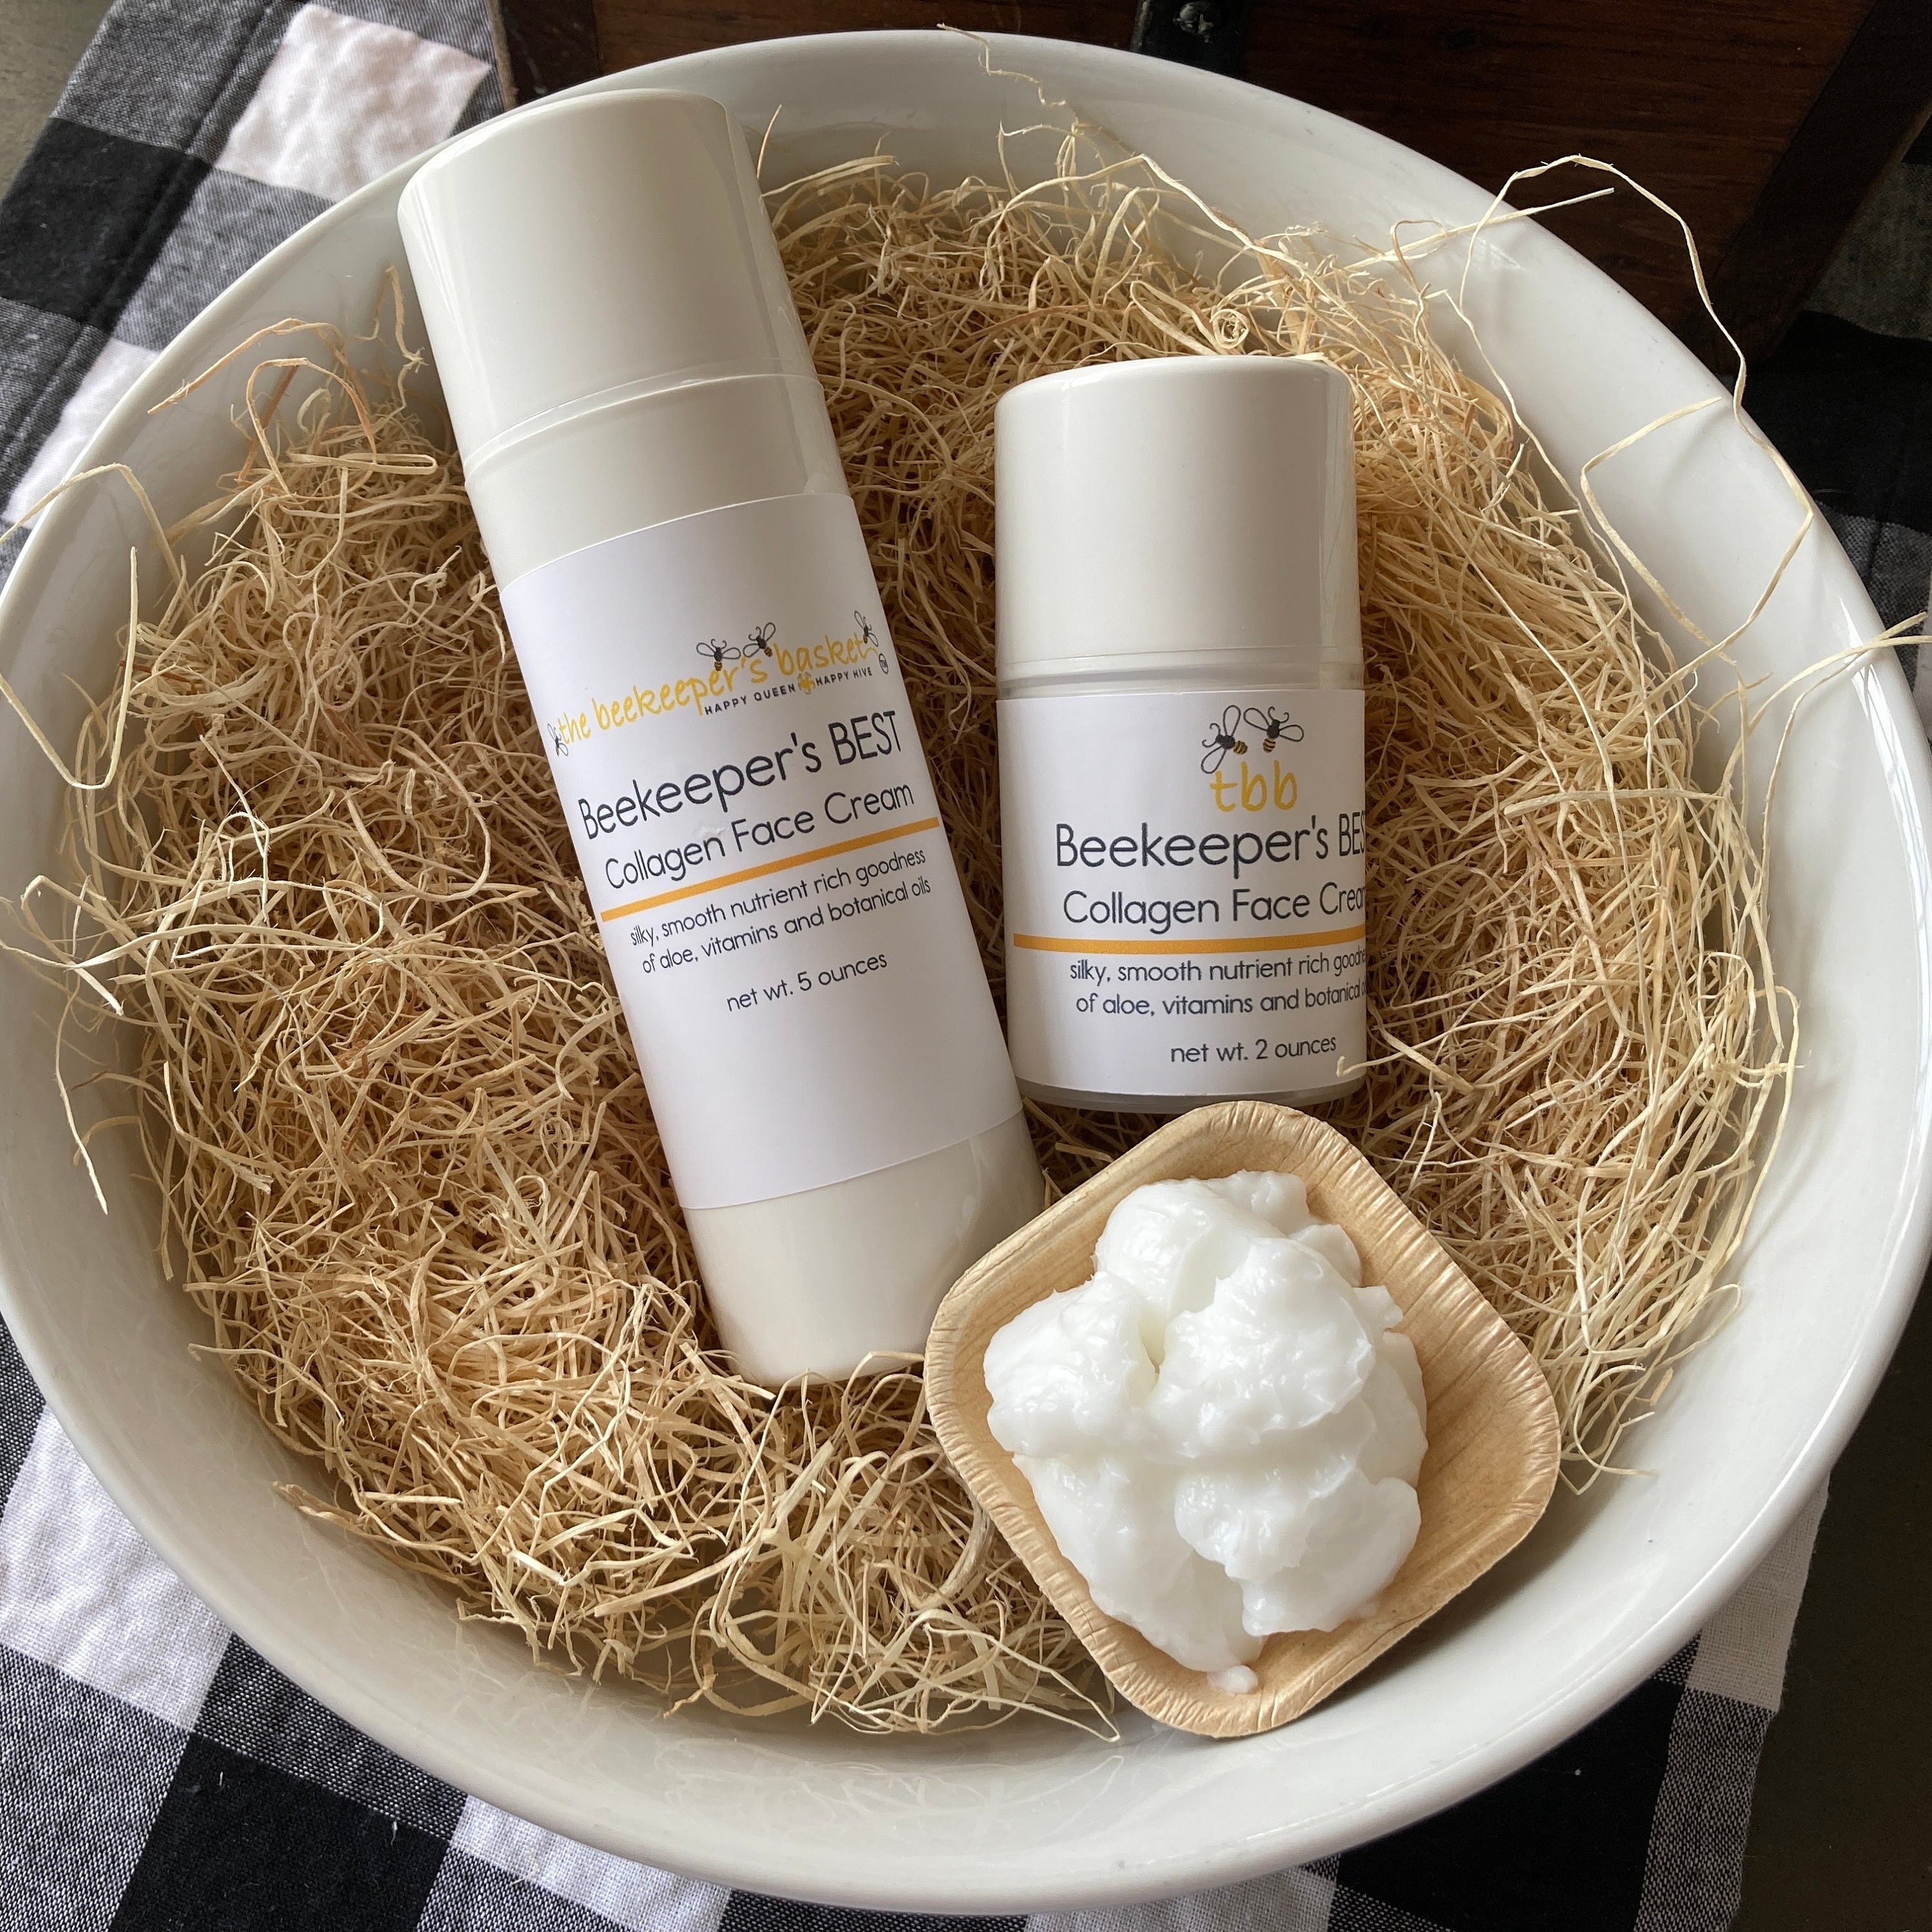 Biokidd Face Paint Natural Washable Cream Kit for Sensitive Skin